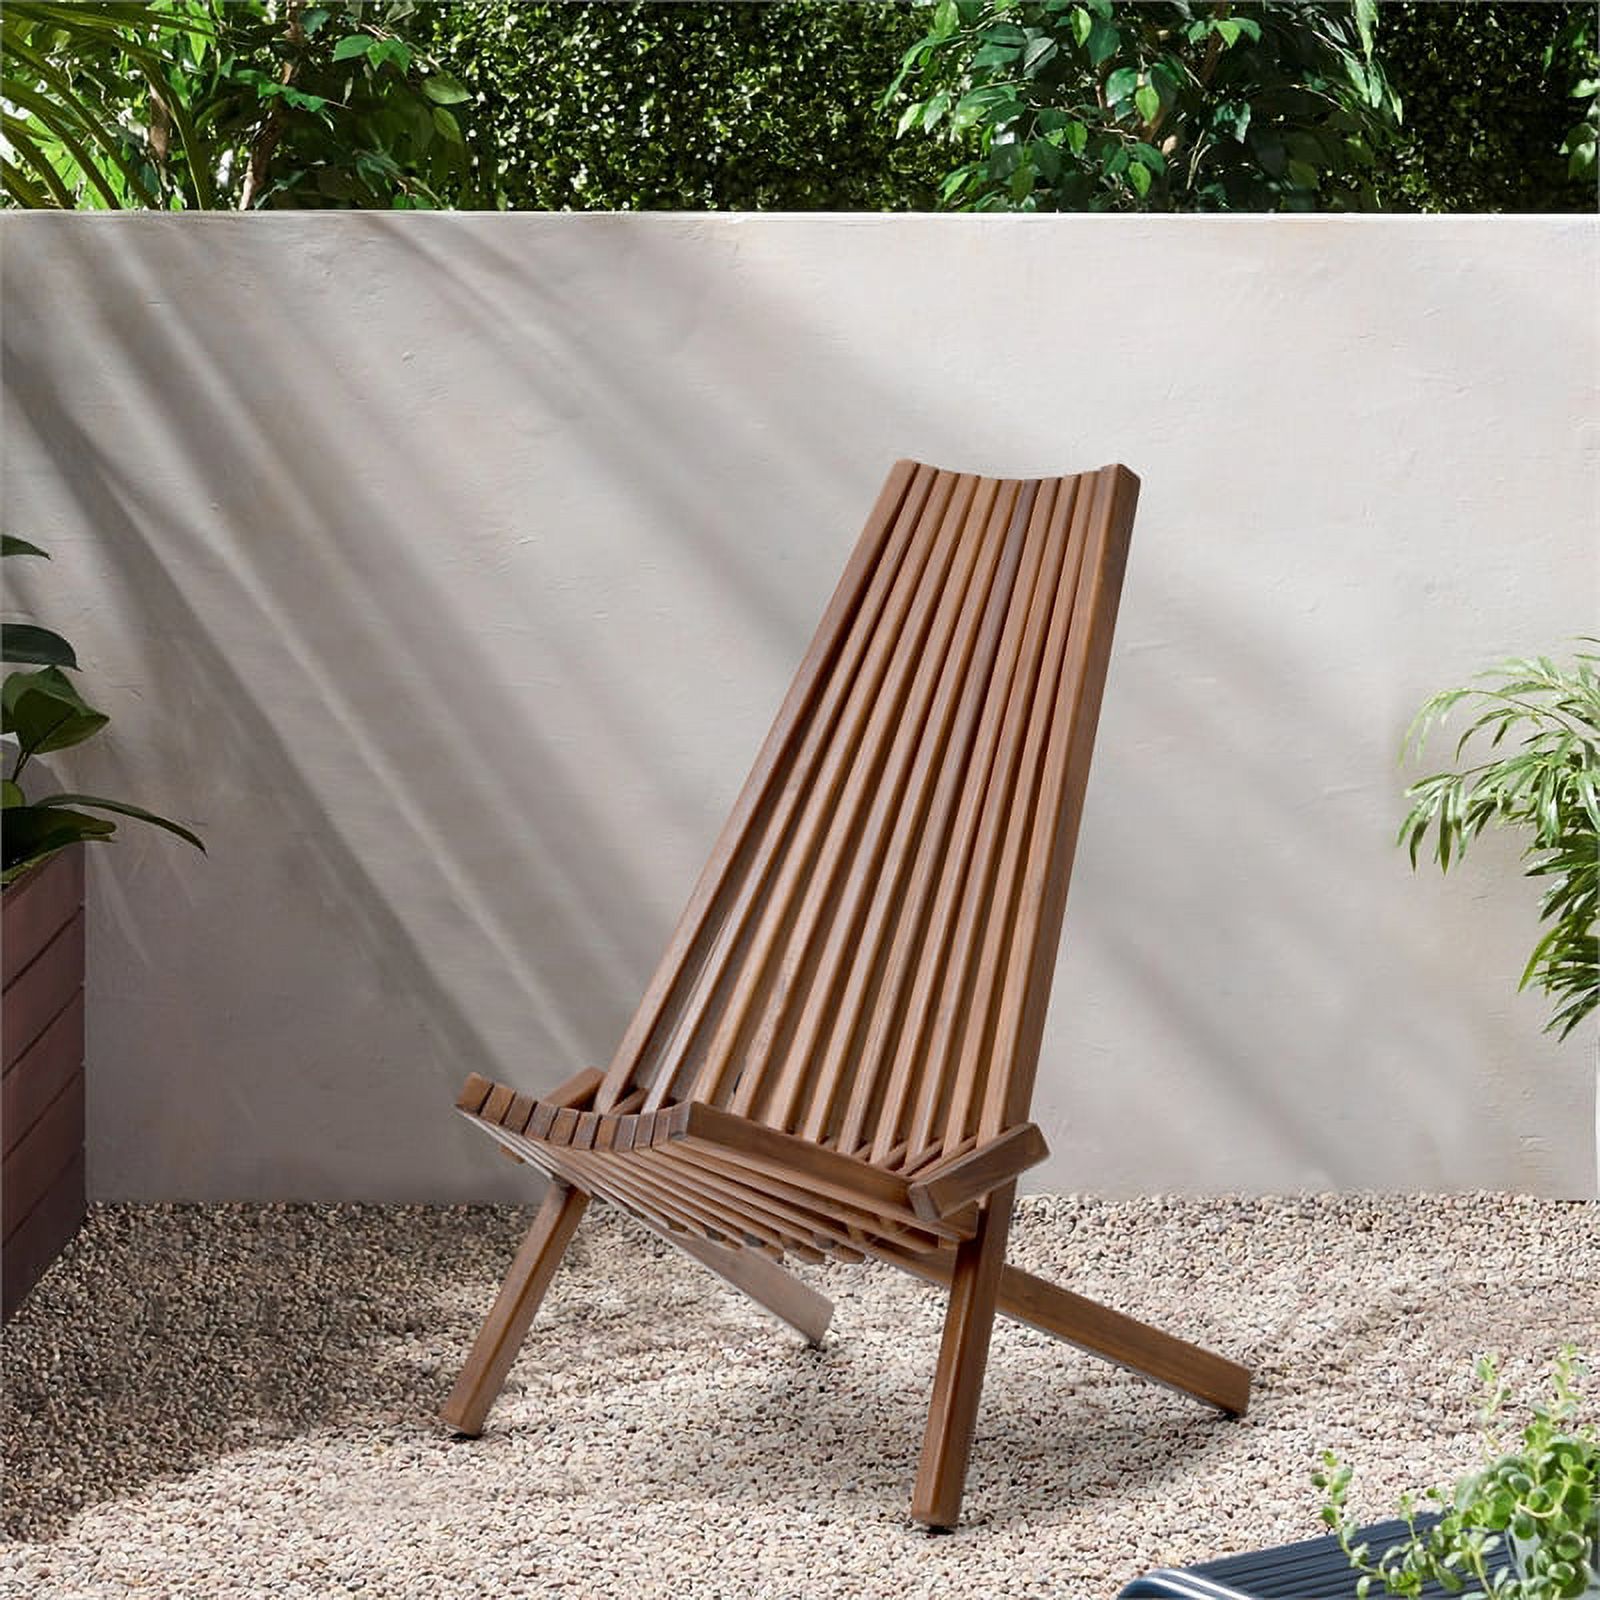 CRO Decor Folding Garden Chairs Acacia Wood Lounge Chair Yard Balcony Furniture - image 4 of 10